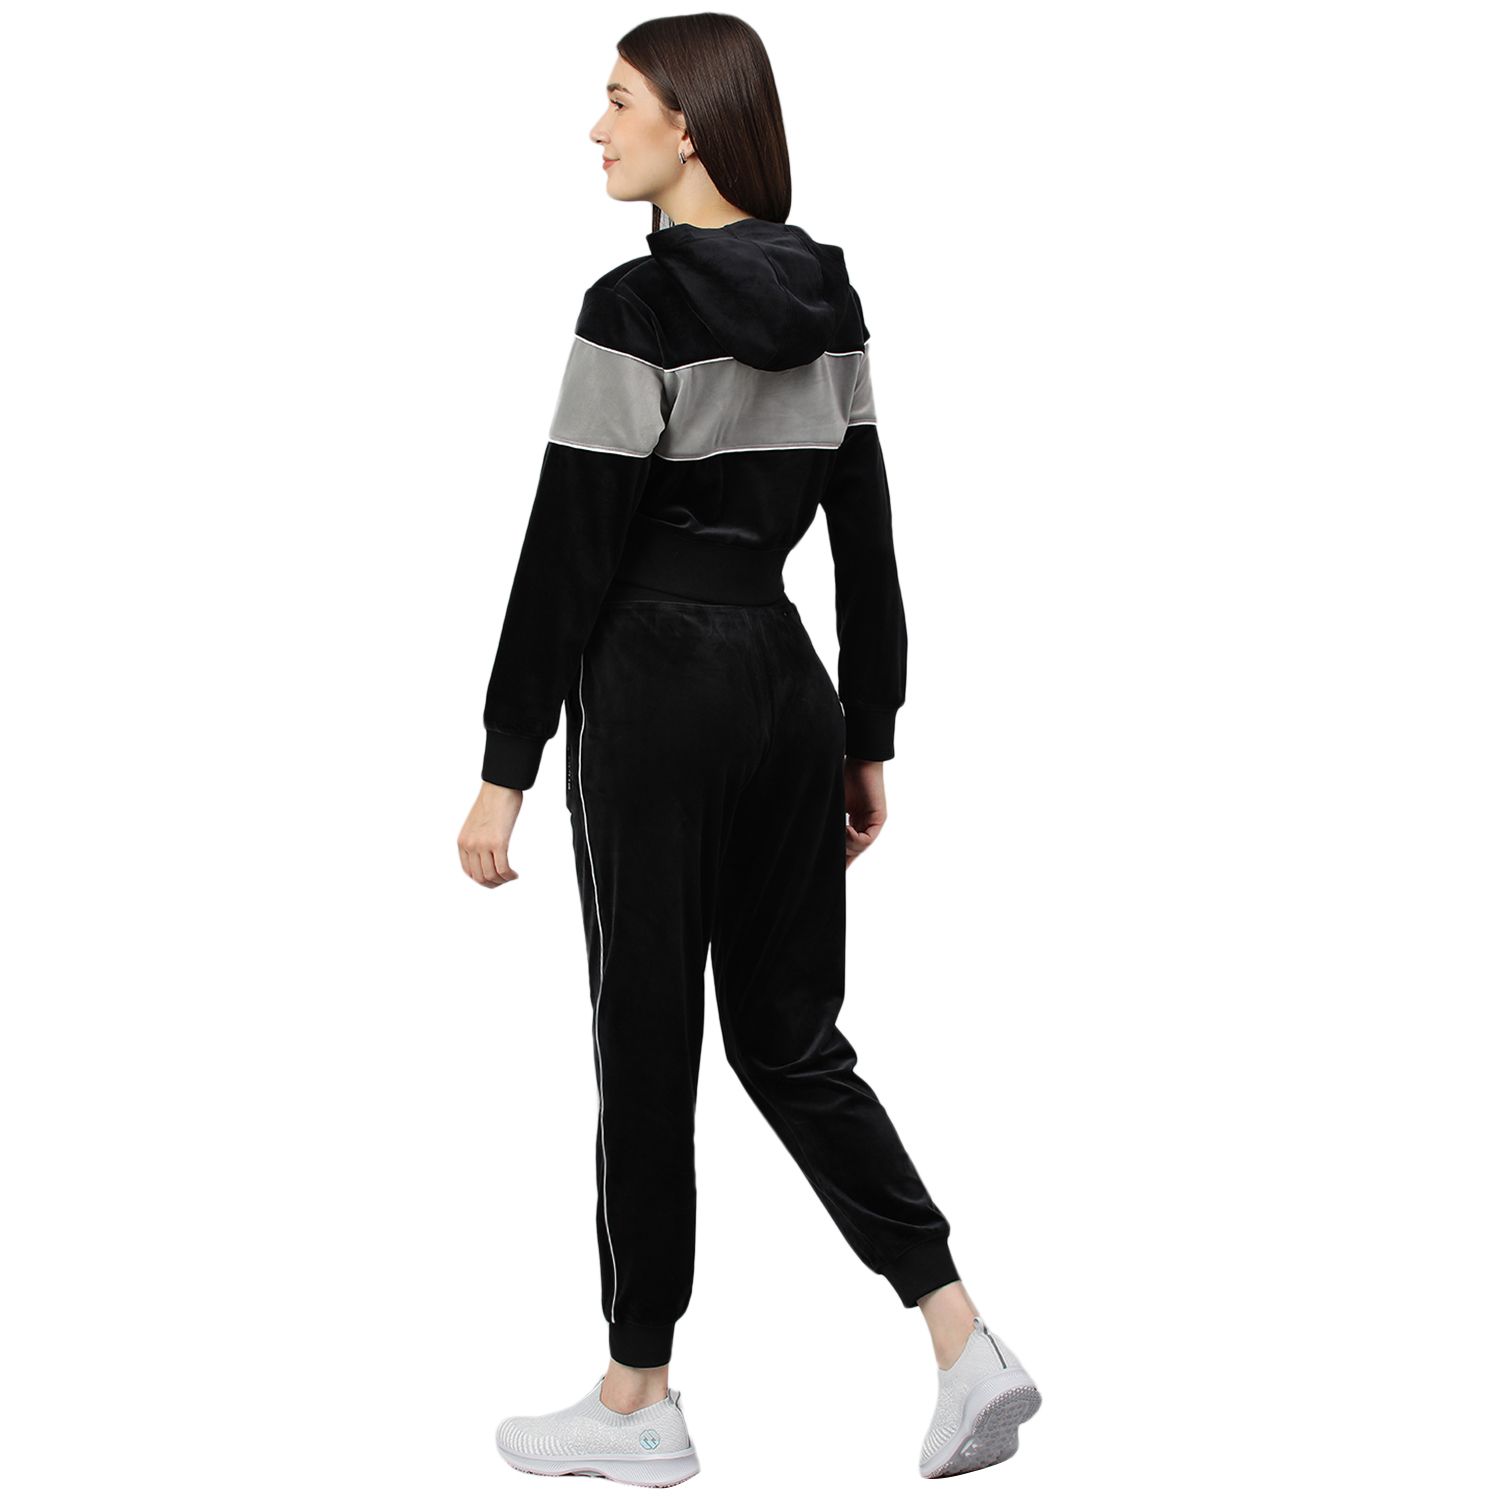 Black/Agrey velour track suit for women